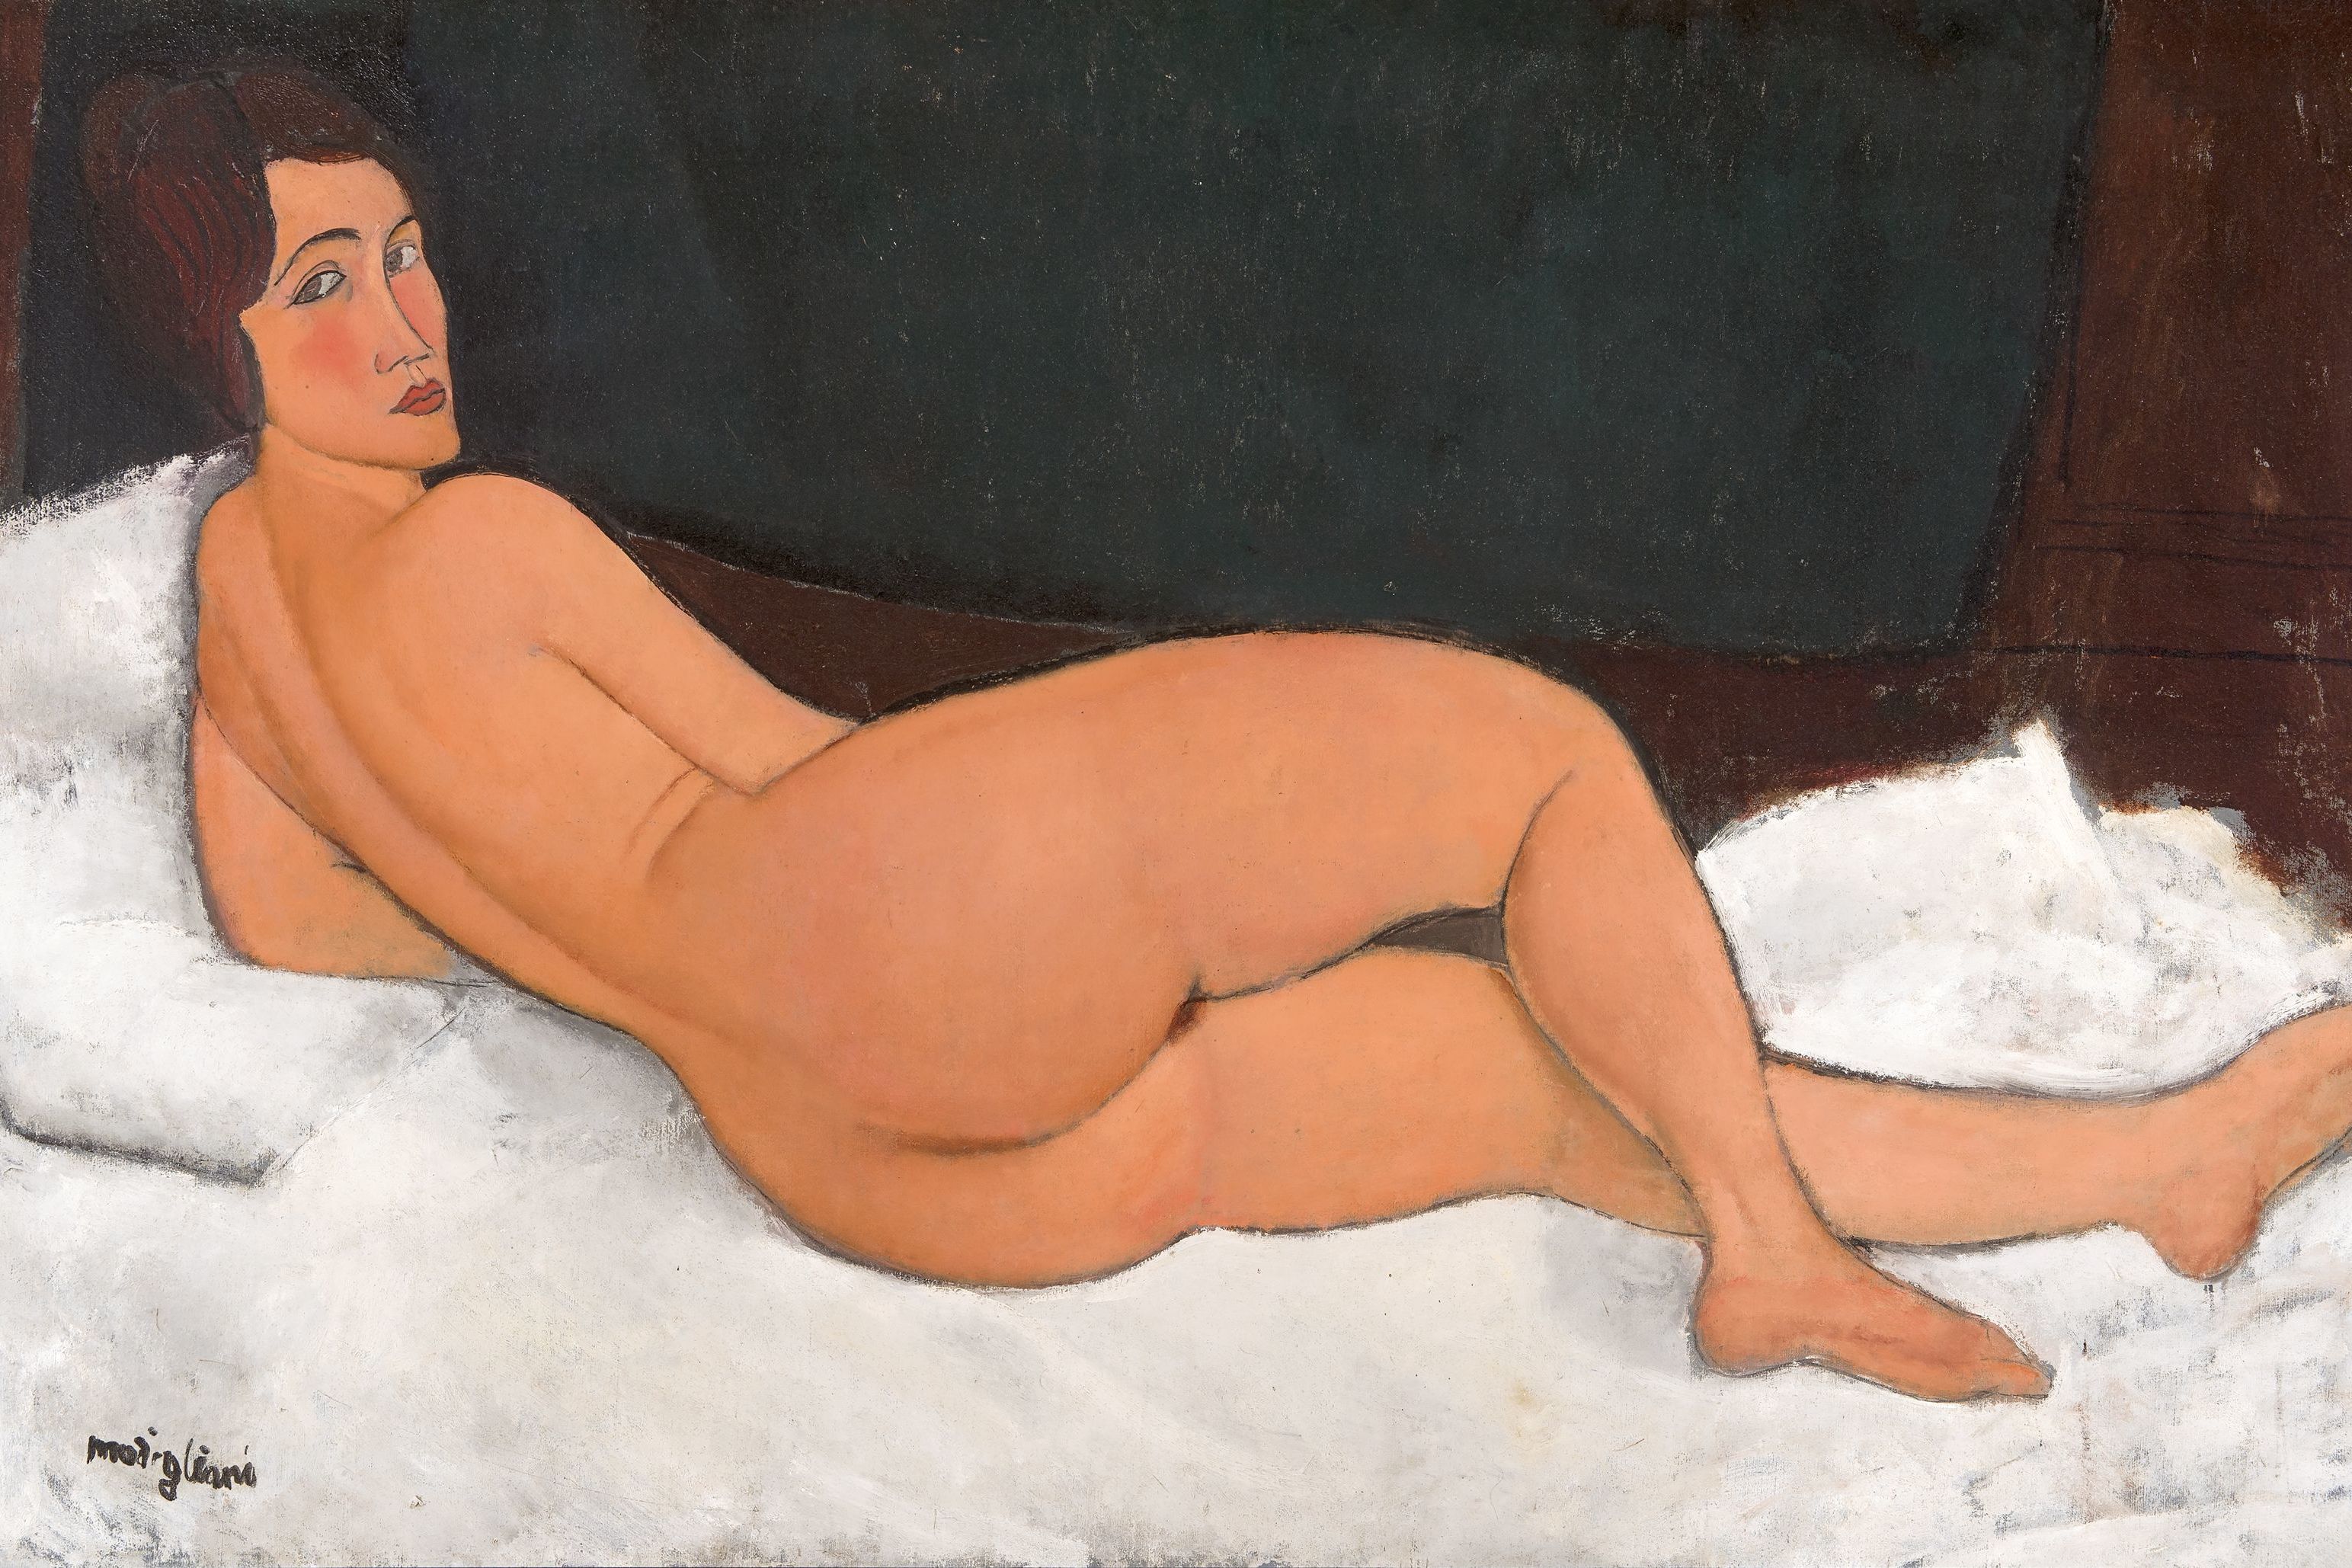 Modern Nudism - Nude art and censorship laid bare | CNN